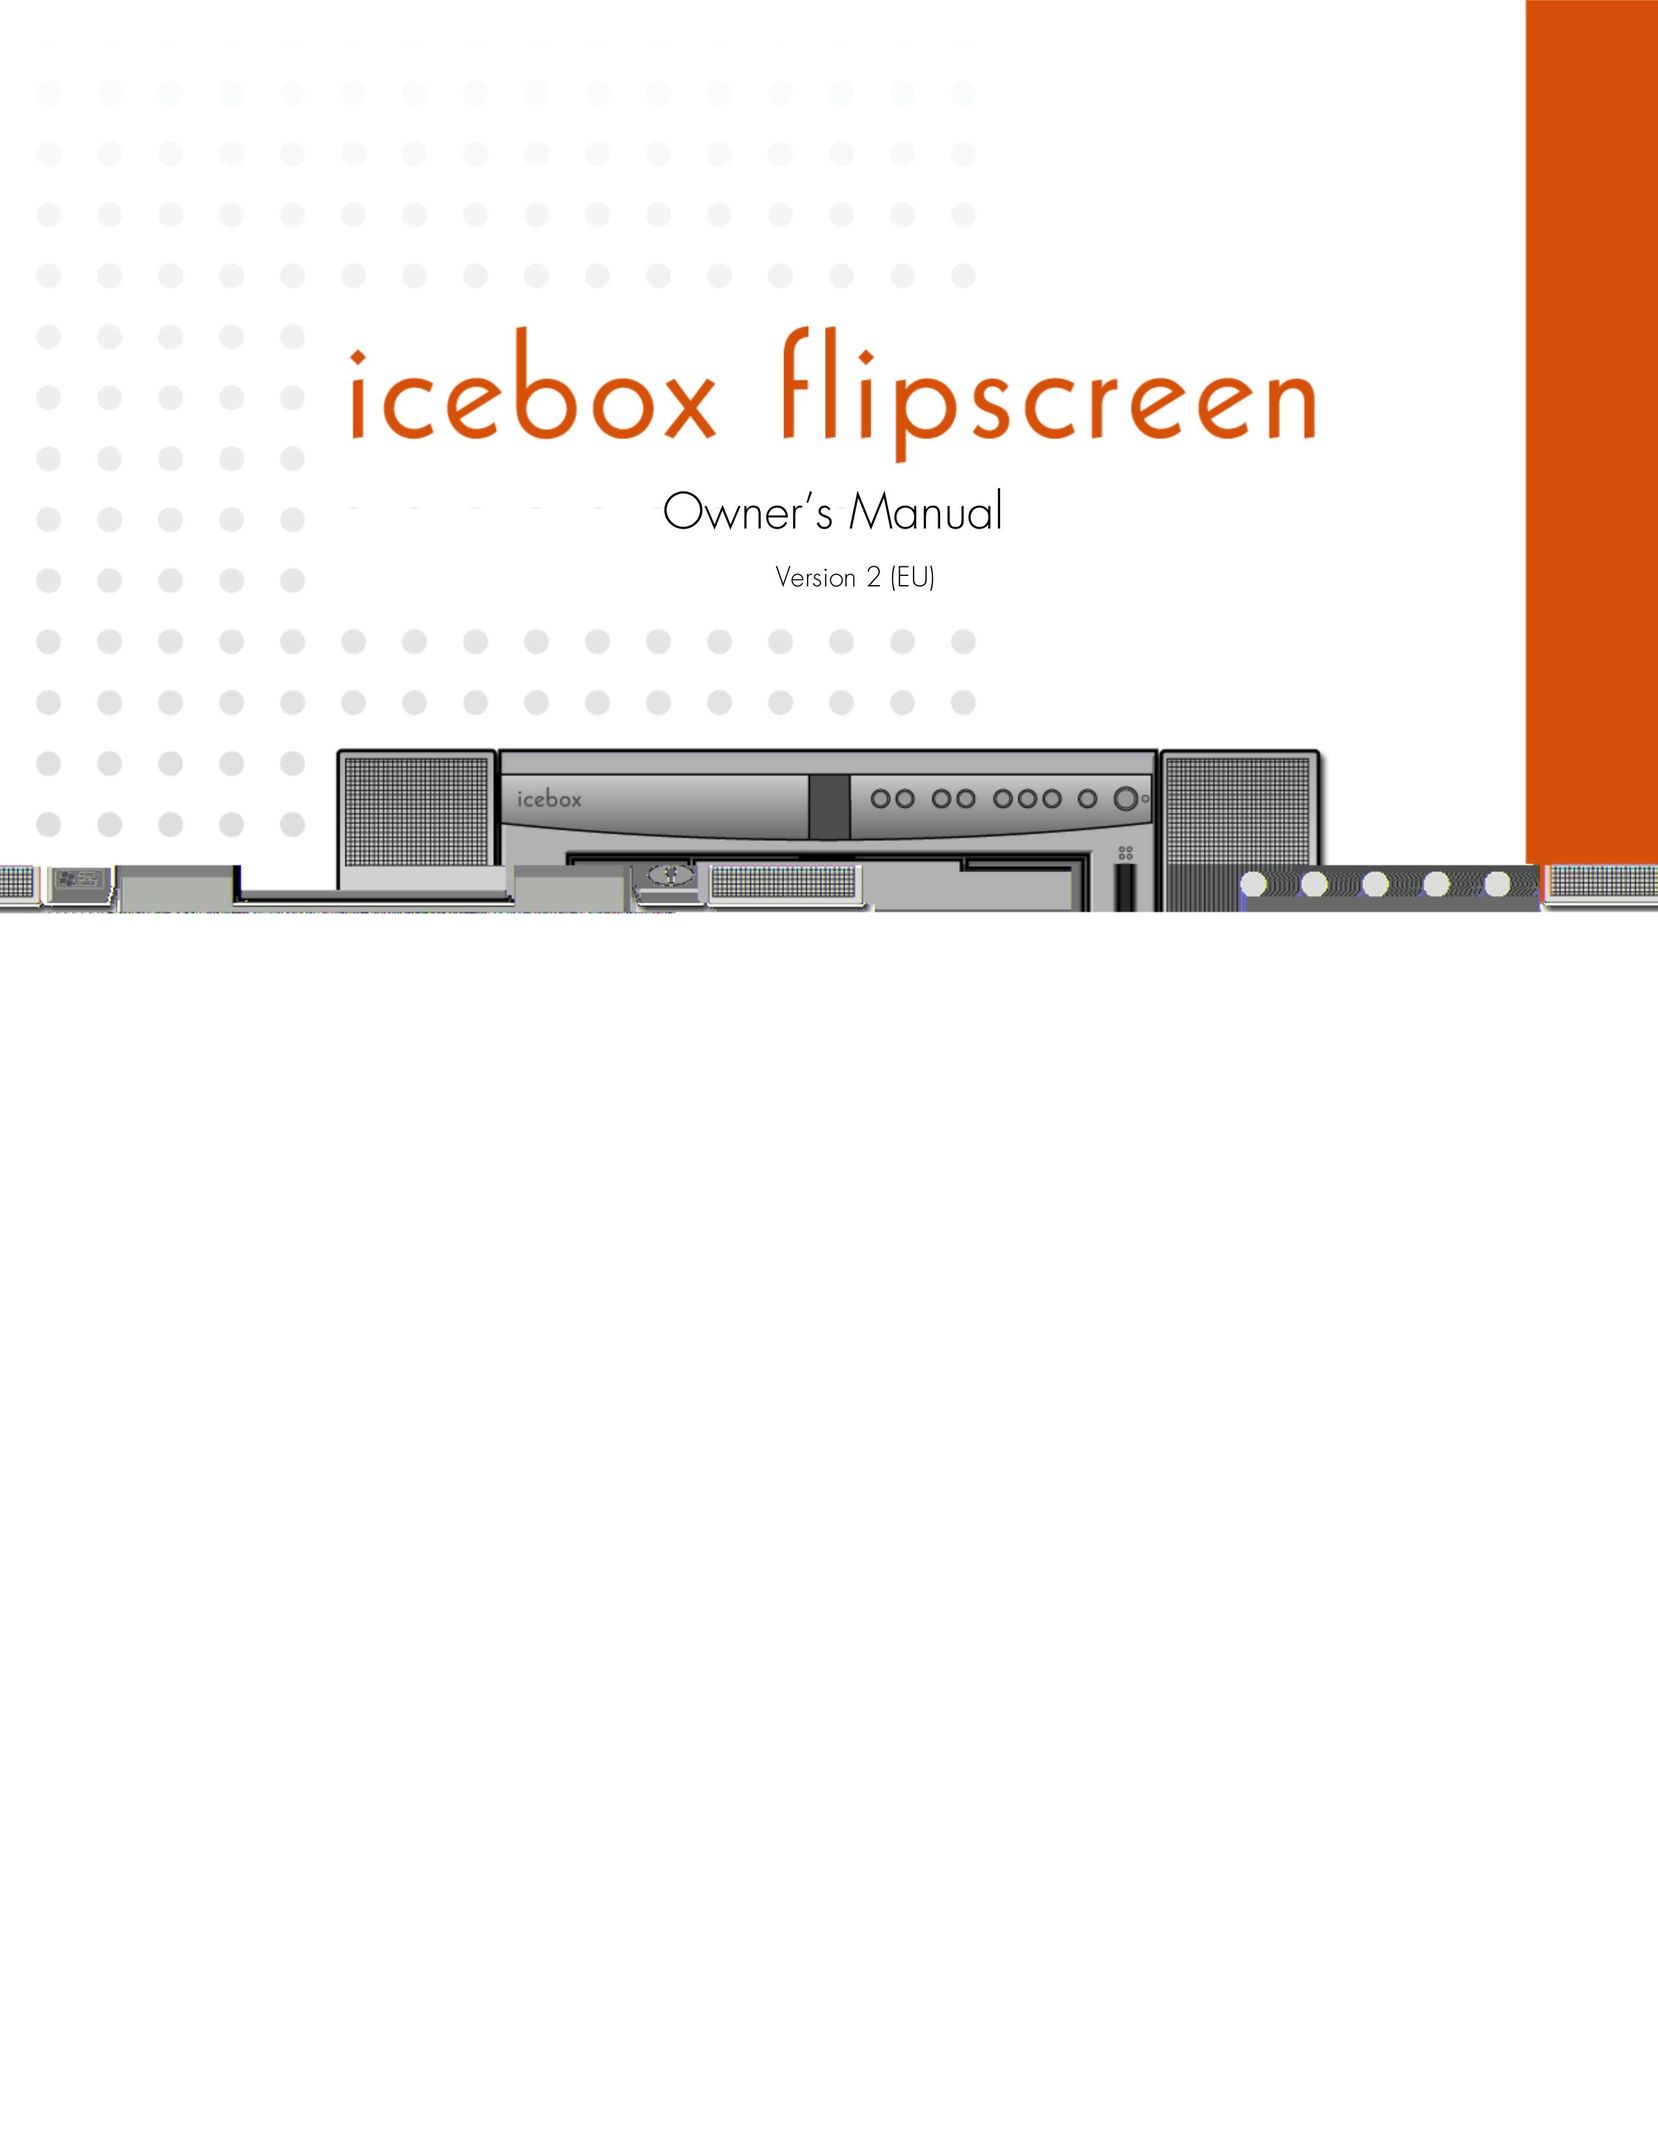 iCEBOX iBOX flipscreen TV DVD Combo User Manual